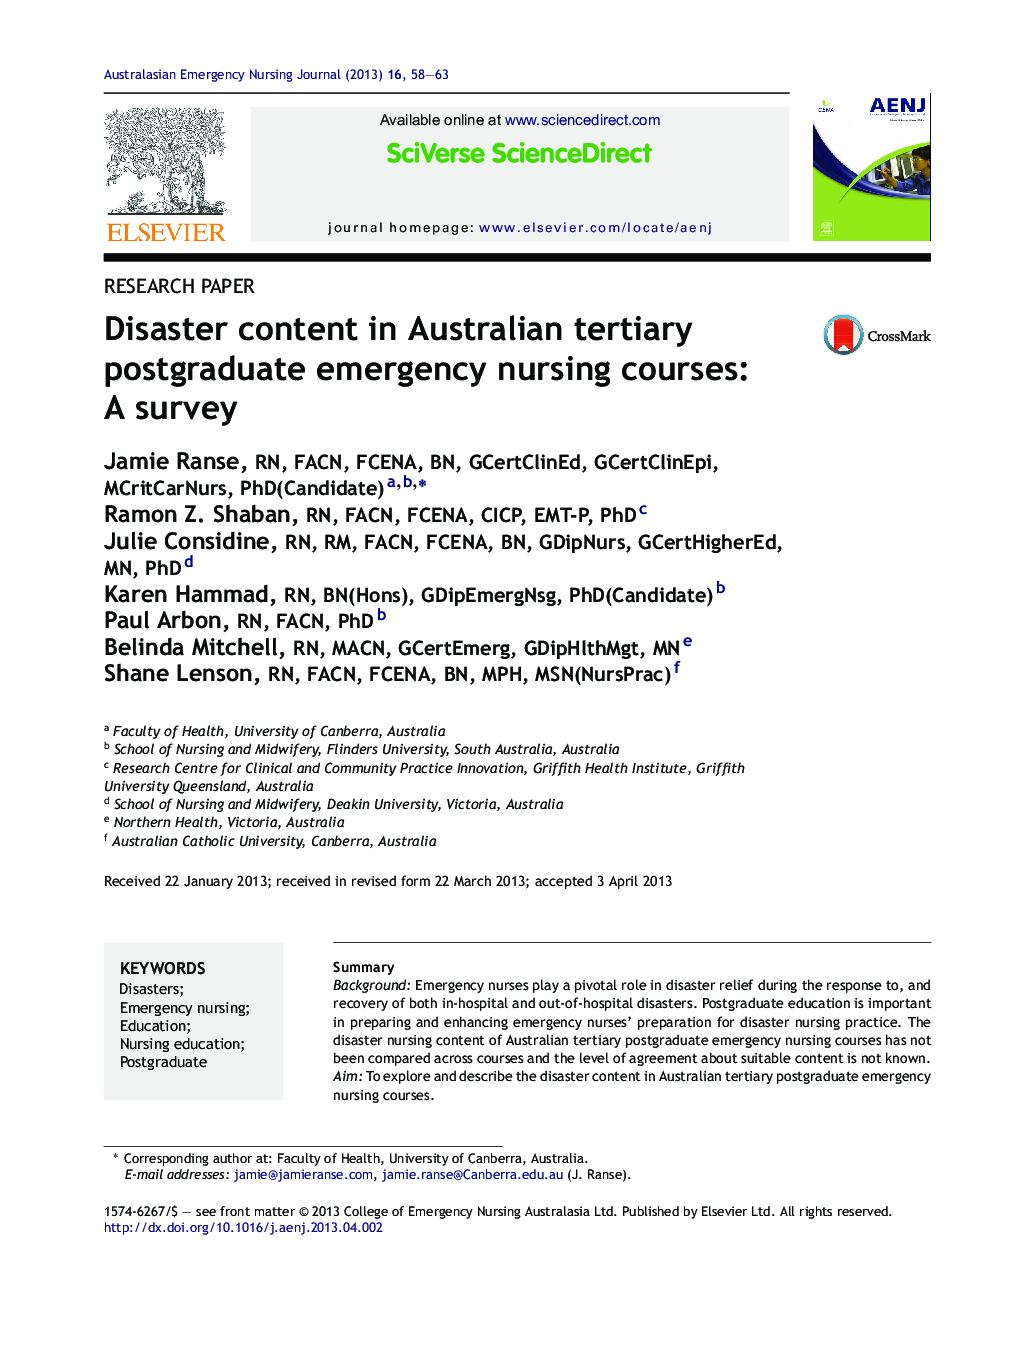 Disaster content in Australian tertiary postgraduate emergency nursing courses: A survey